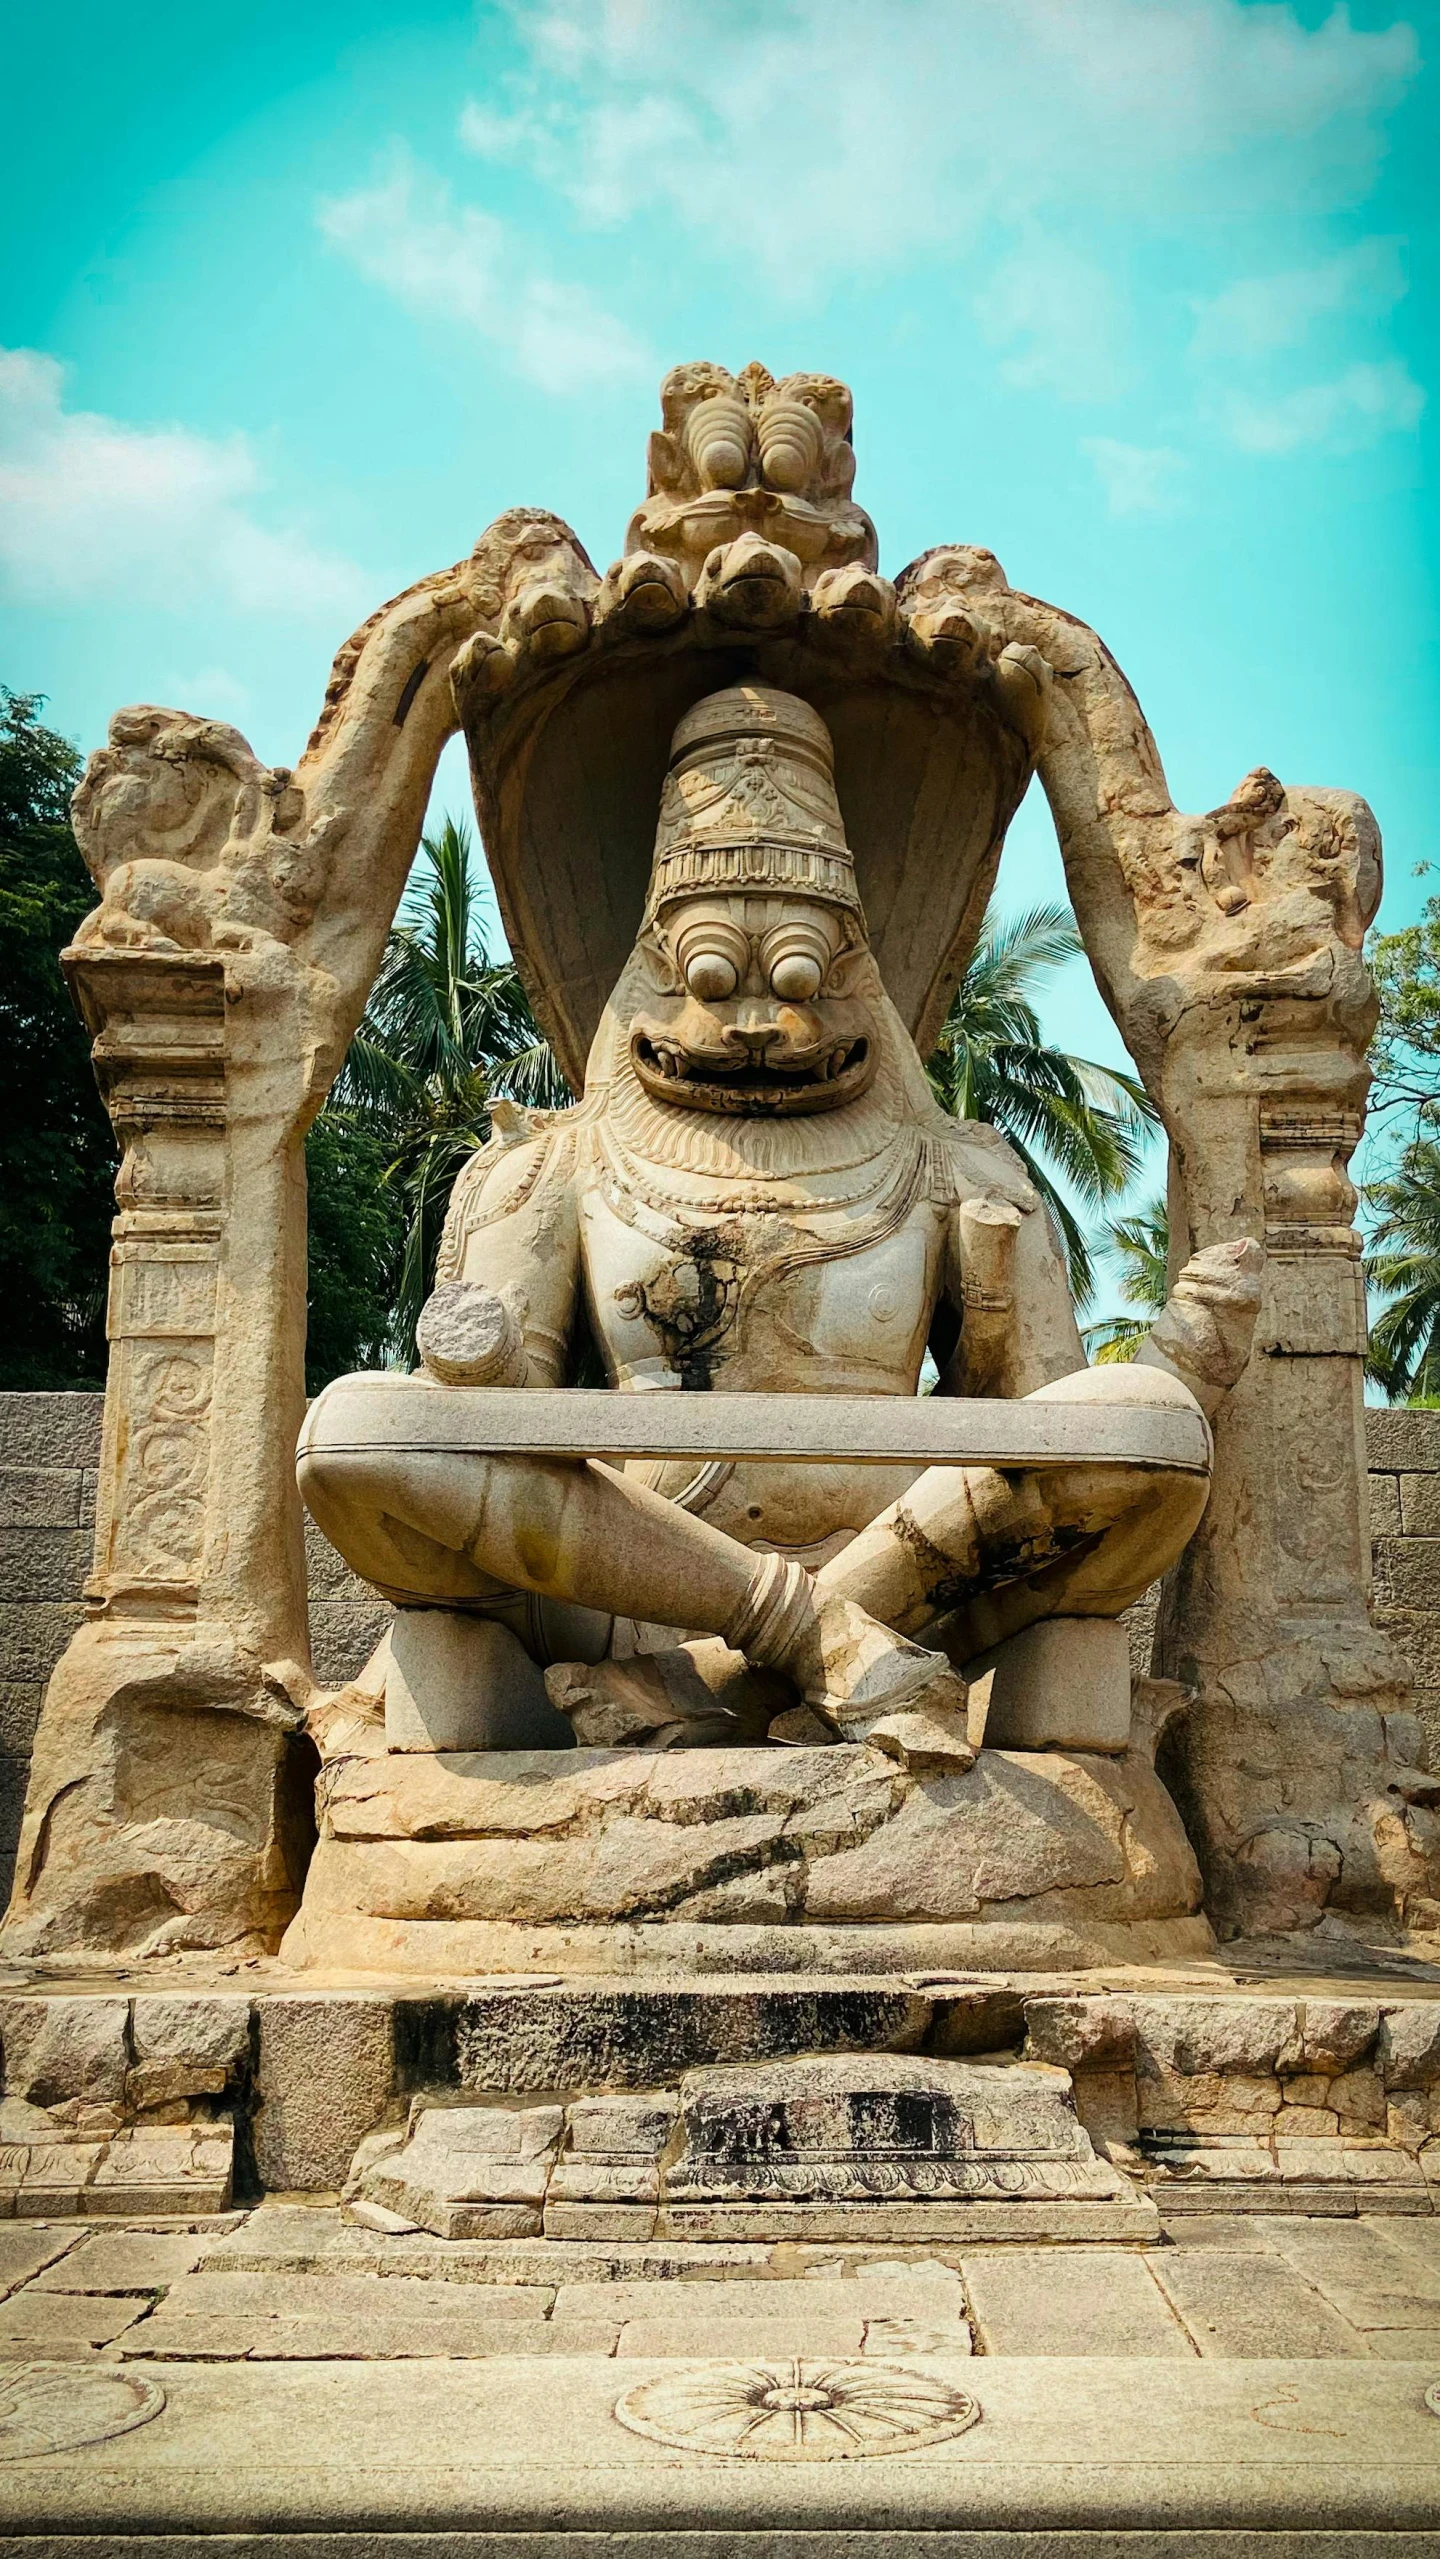 an old statue is sitting near a tall stone pillar